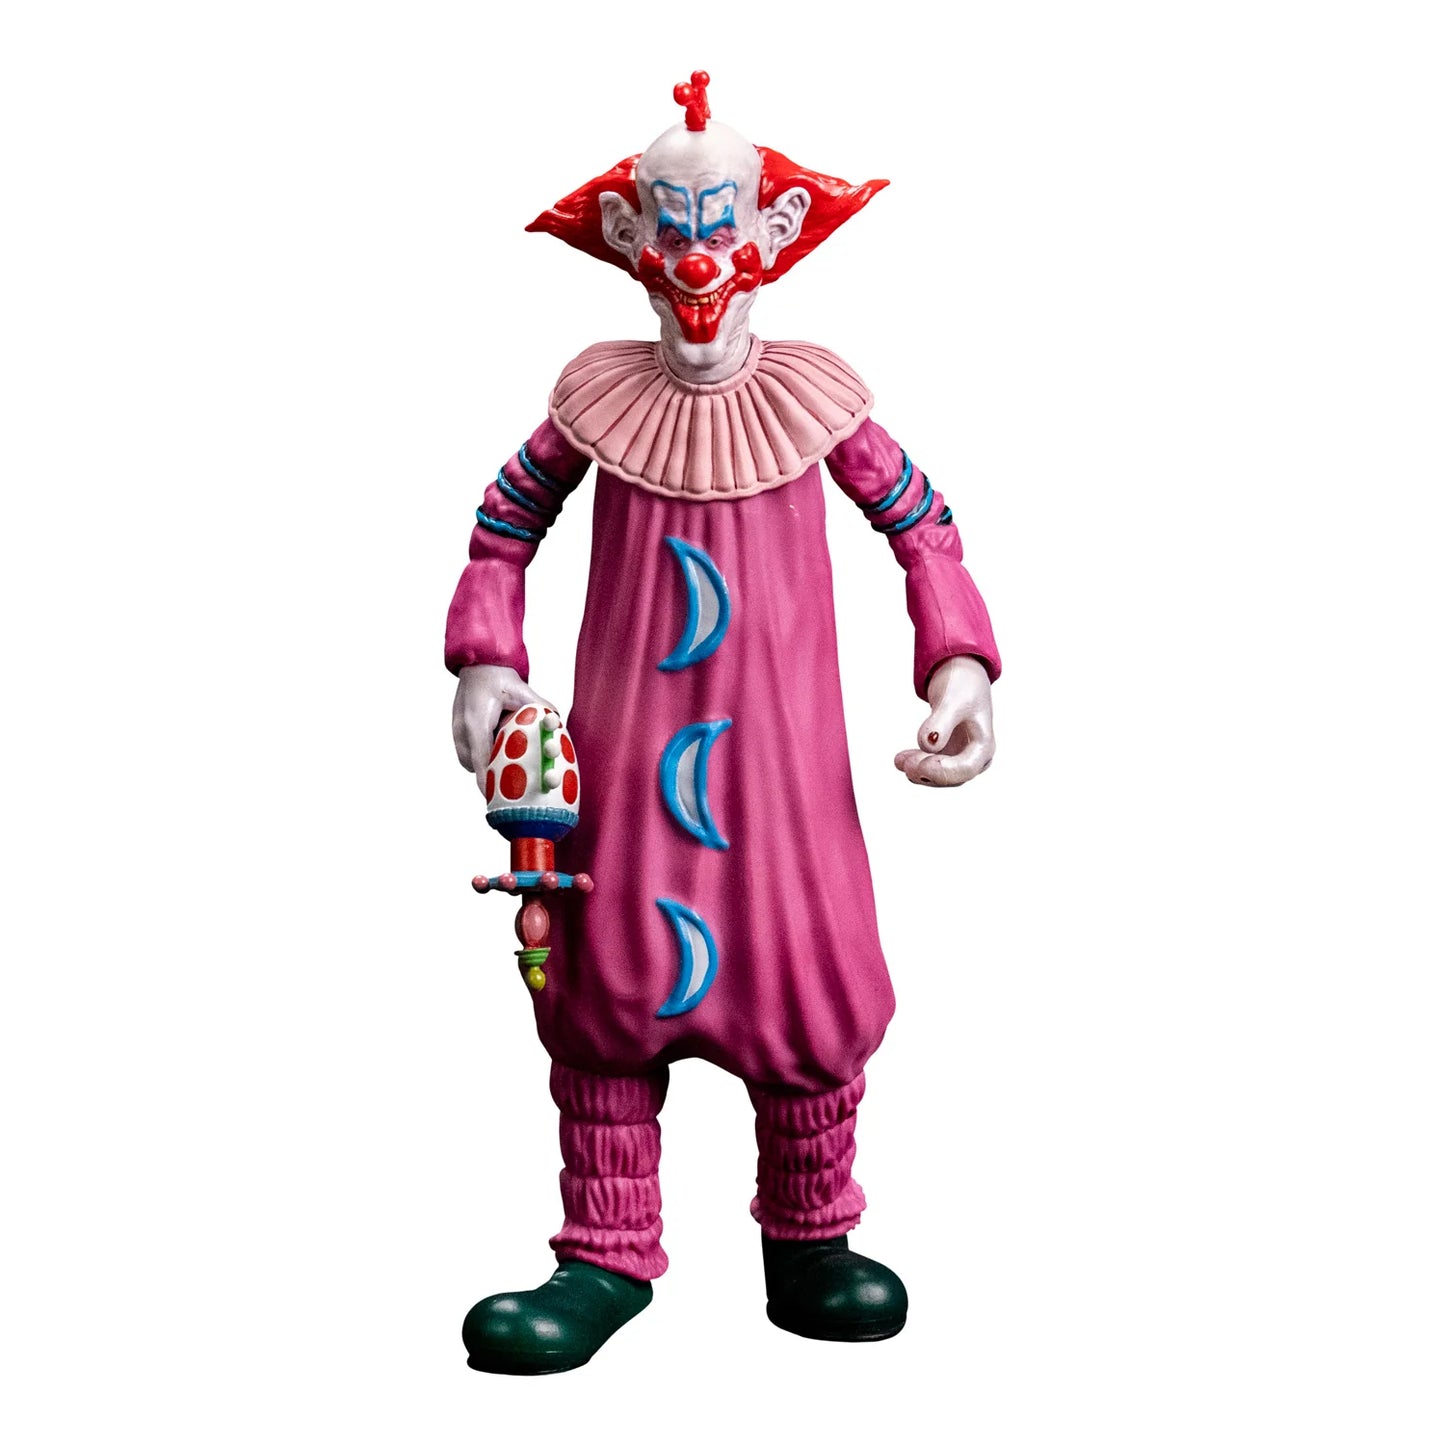 Killer Klowns Slim action figure